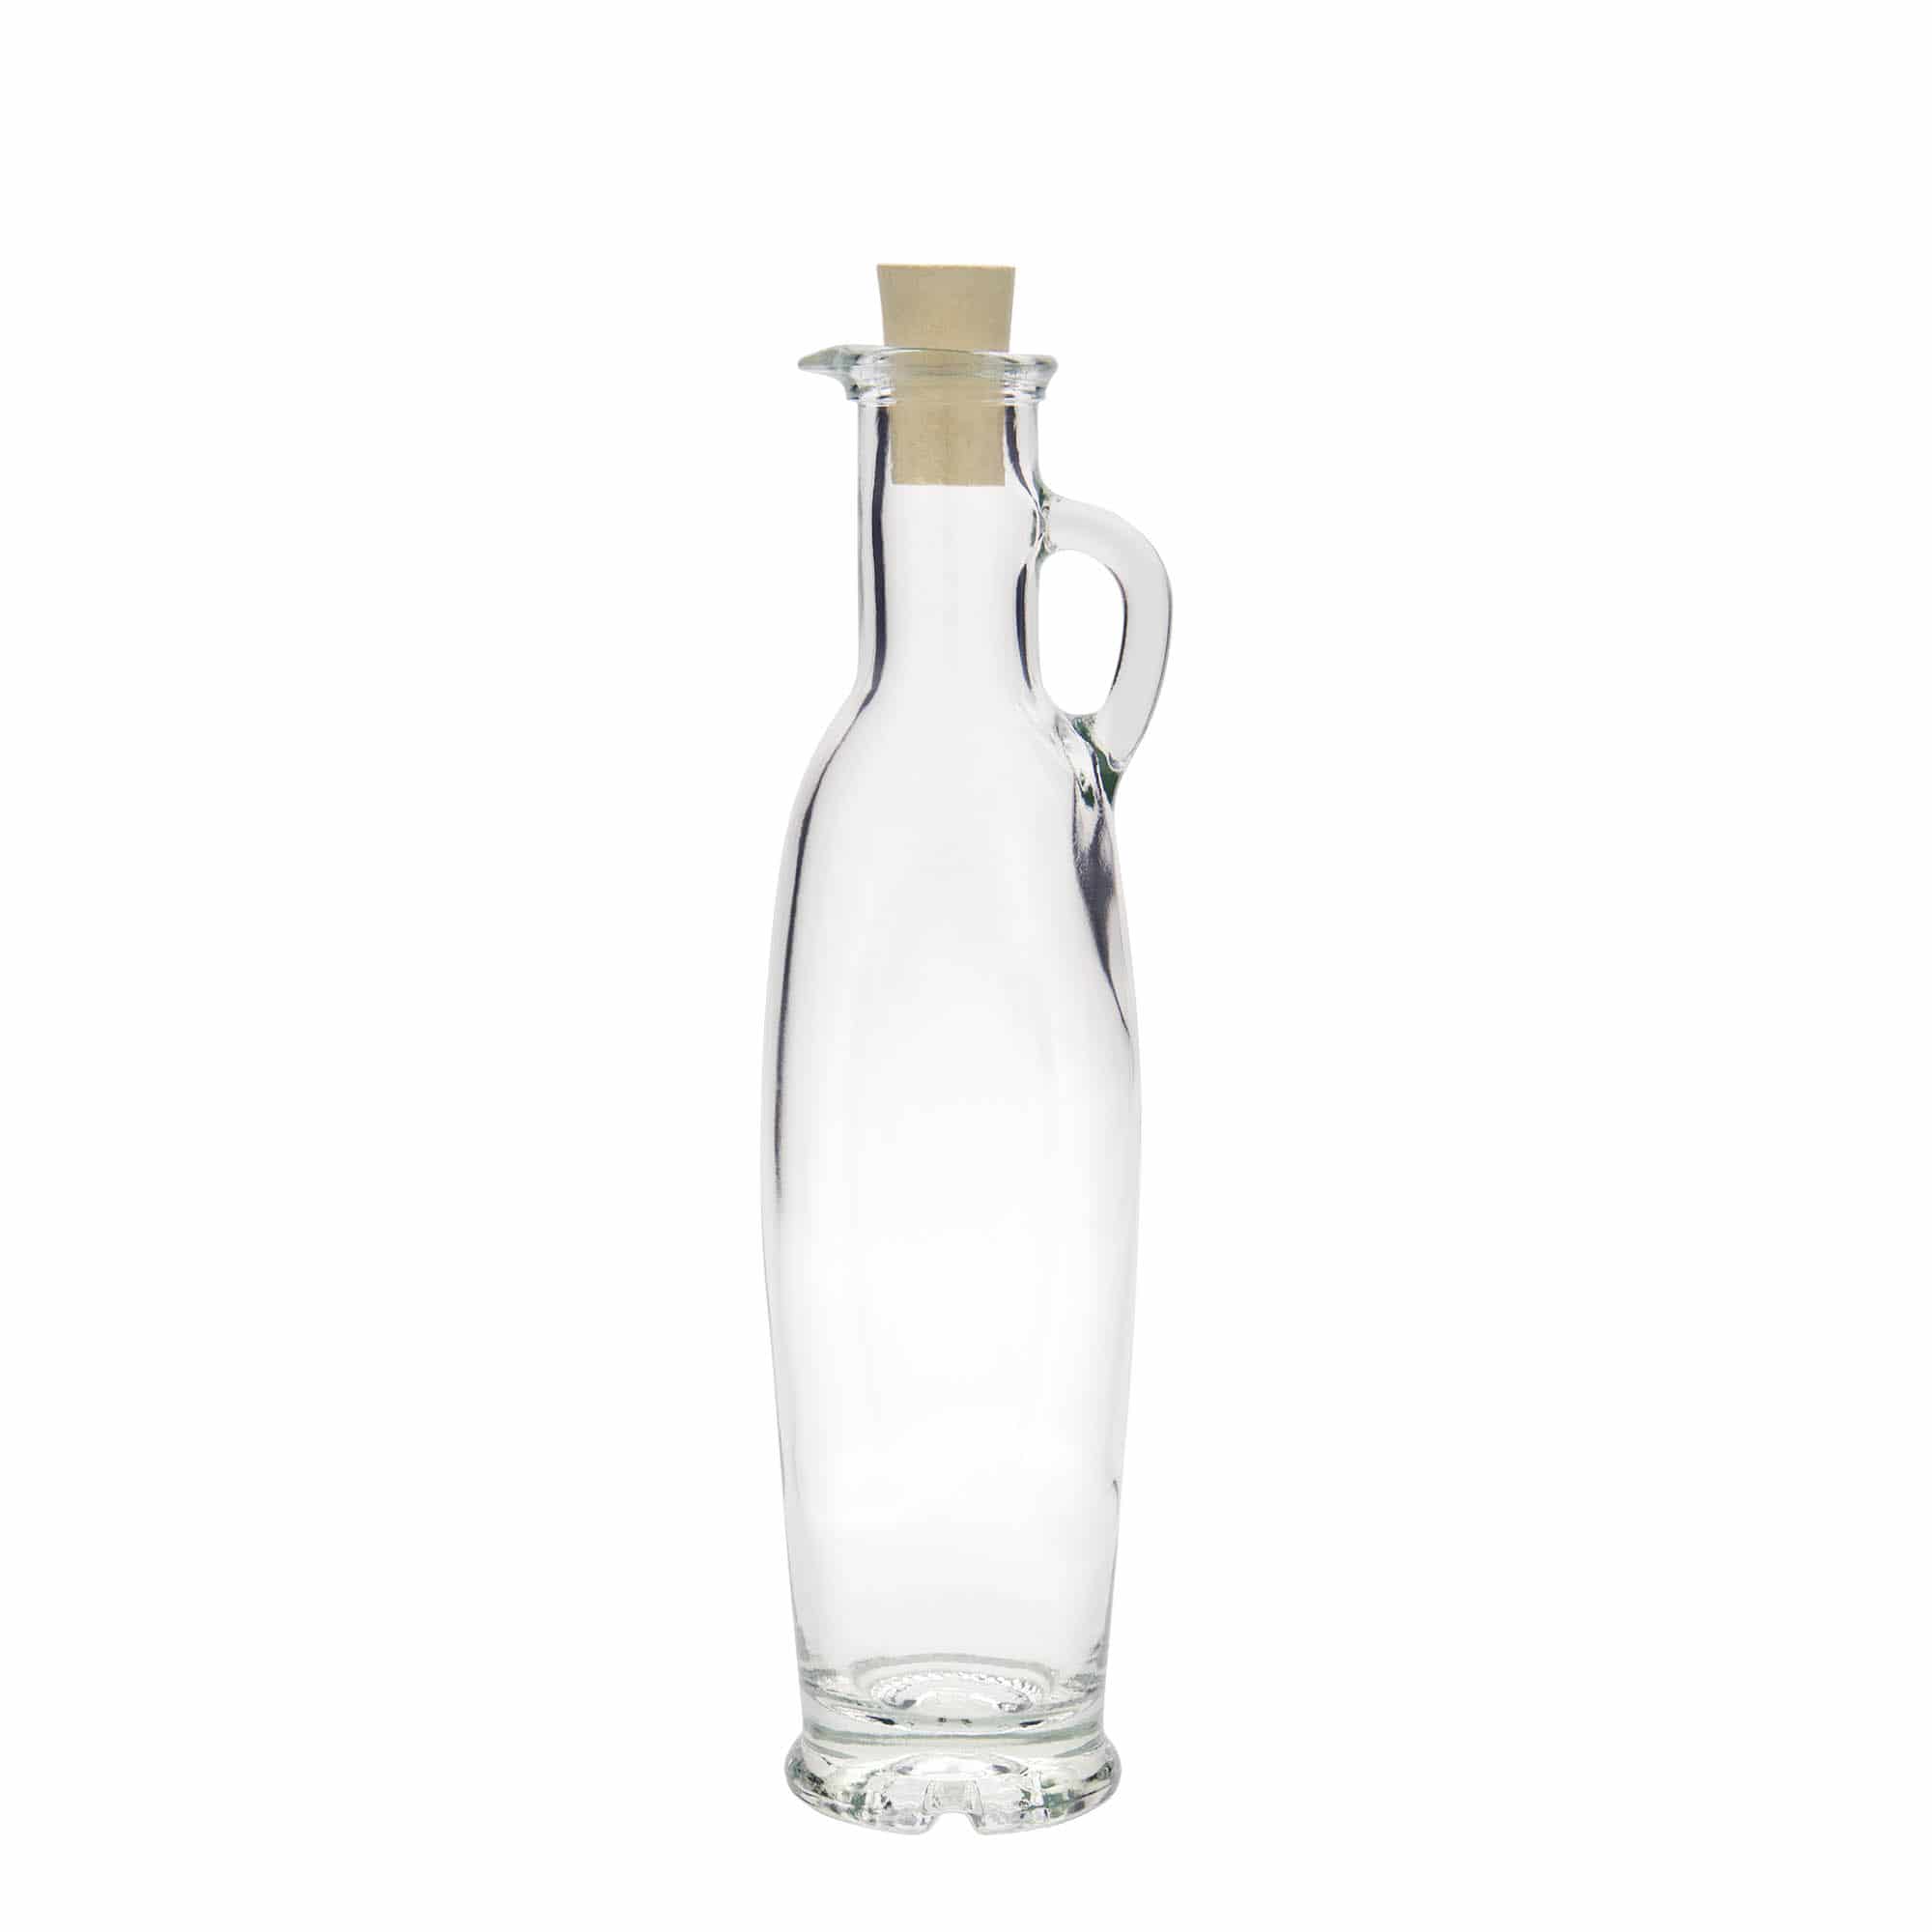 250 ml glass bottle 'Simona', closure: cork